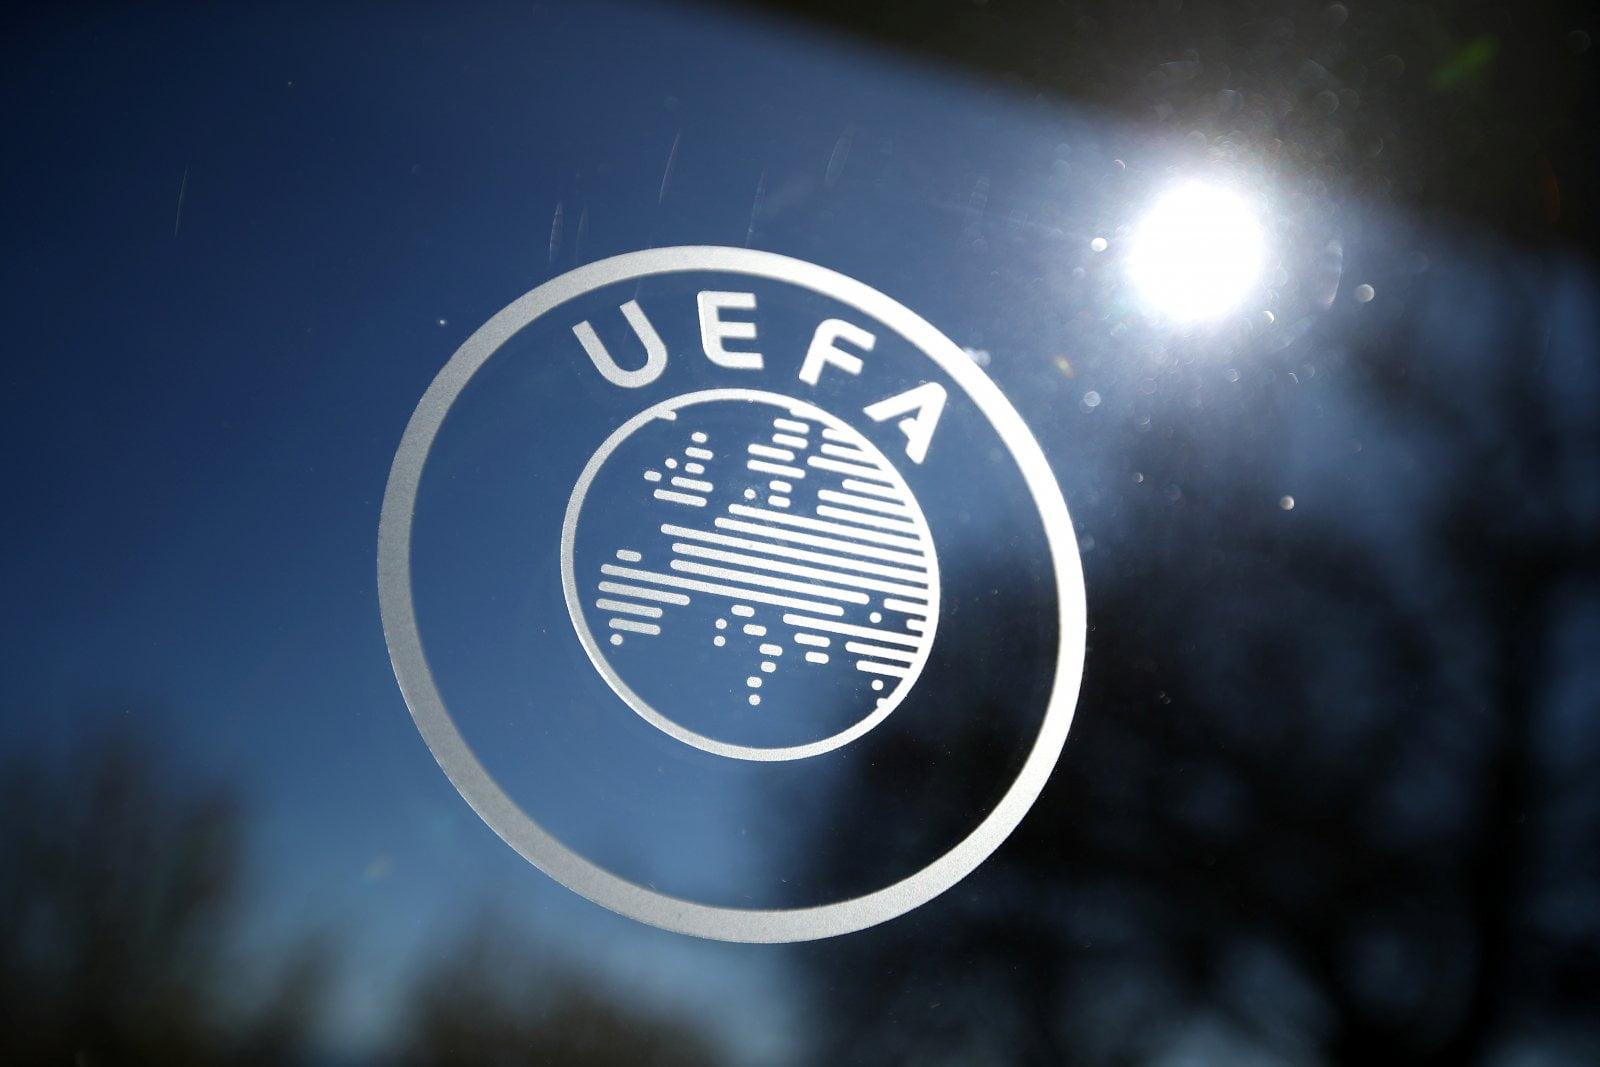 Super League: Barcelona, Real Madrid, Juventus react as UEFA announces punishment